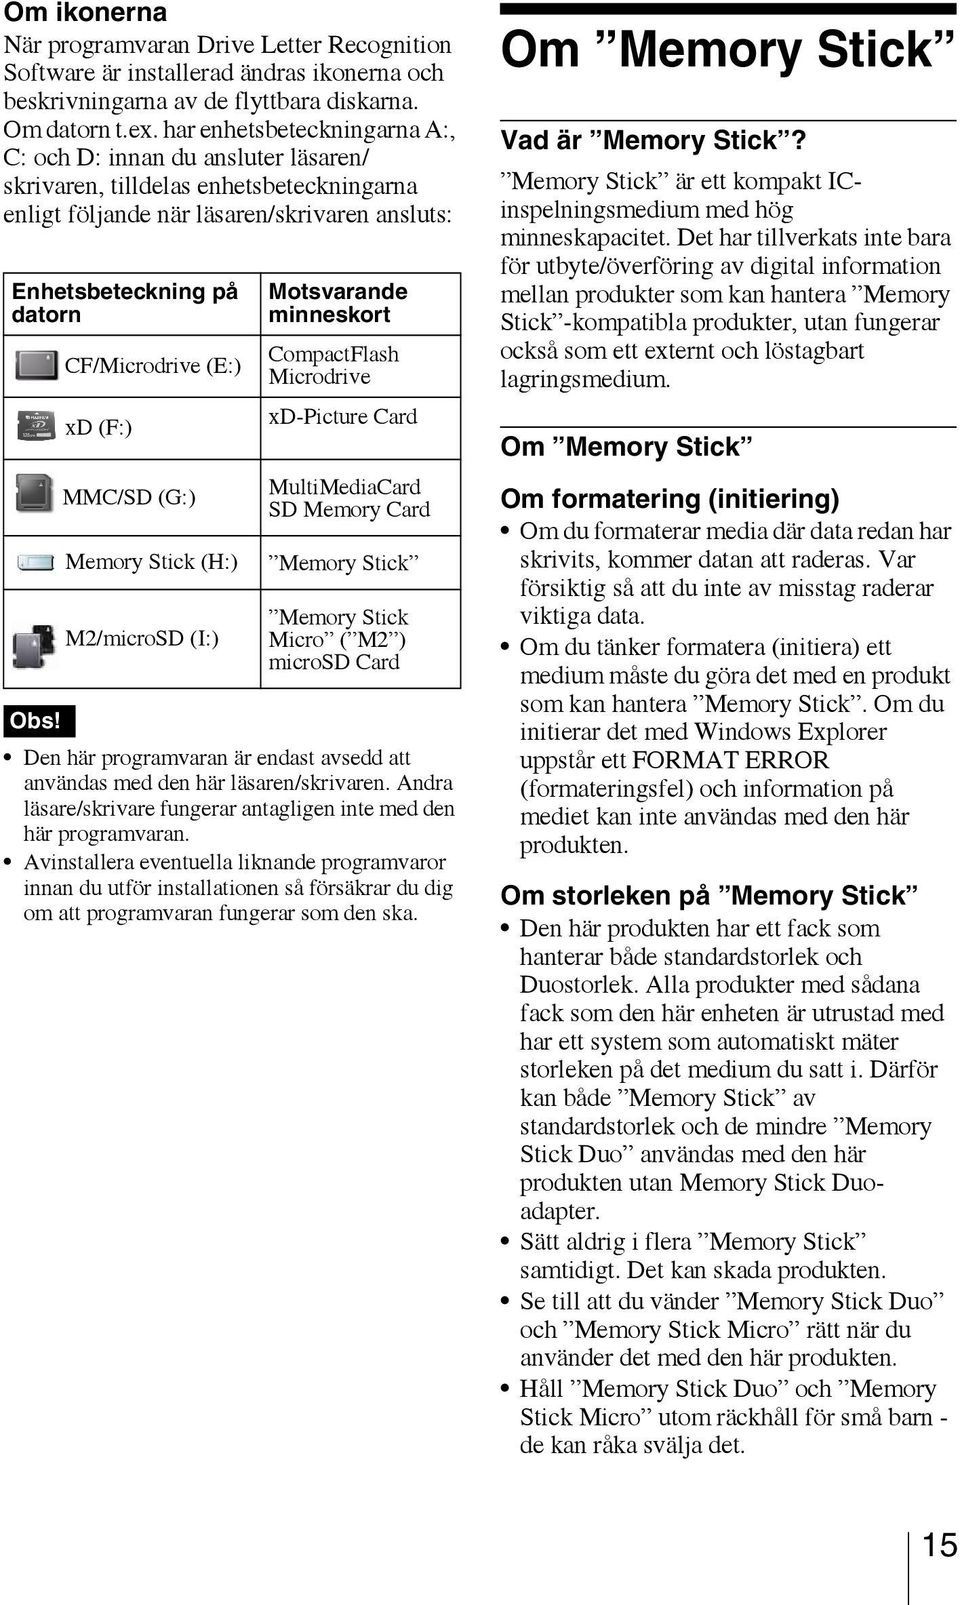 (E:) xd (F:) MMC/SD (G:) Memory Stick (H:) M2/microSD (I:) Motsvarande minneskort CompactFlash Microdrive xd-picture Card MultiMediaCard SD Memory Card Memory Stick Memory Stick Micro ( M2 ) microsd